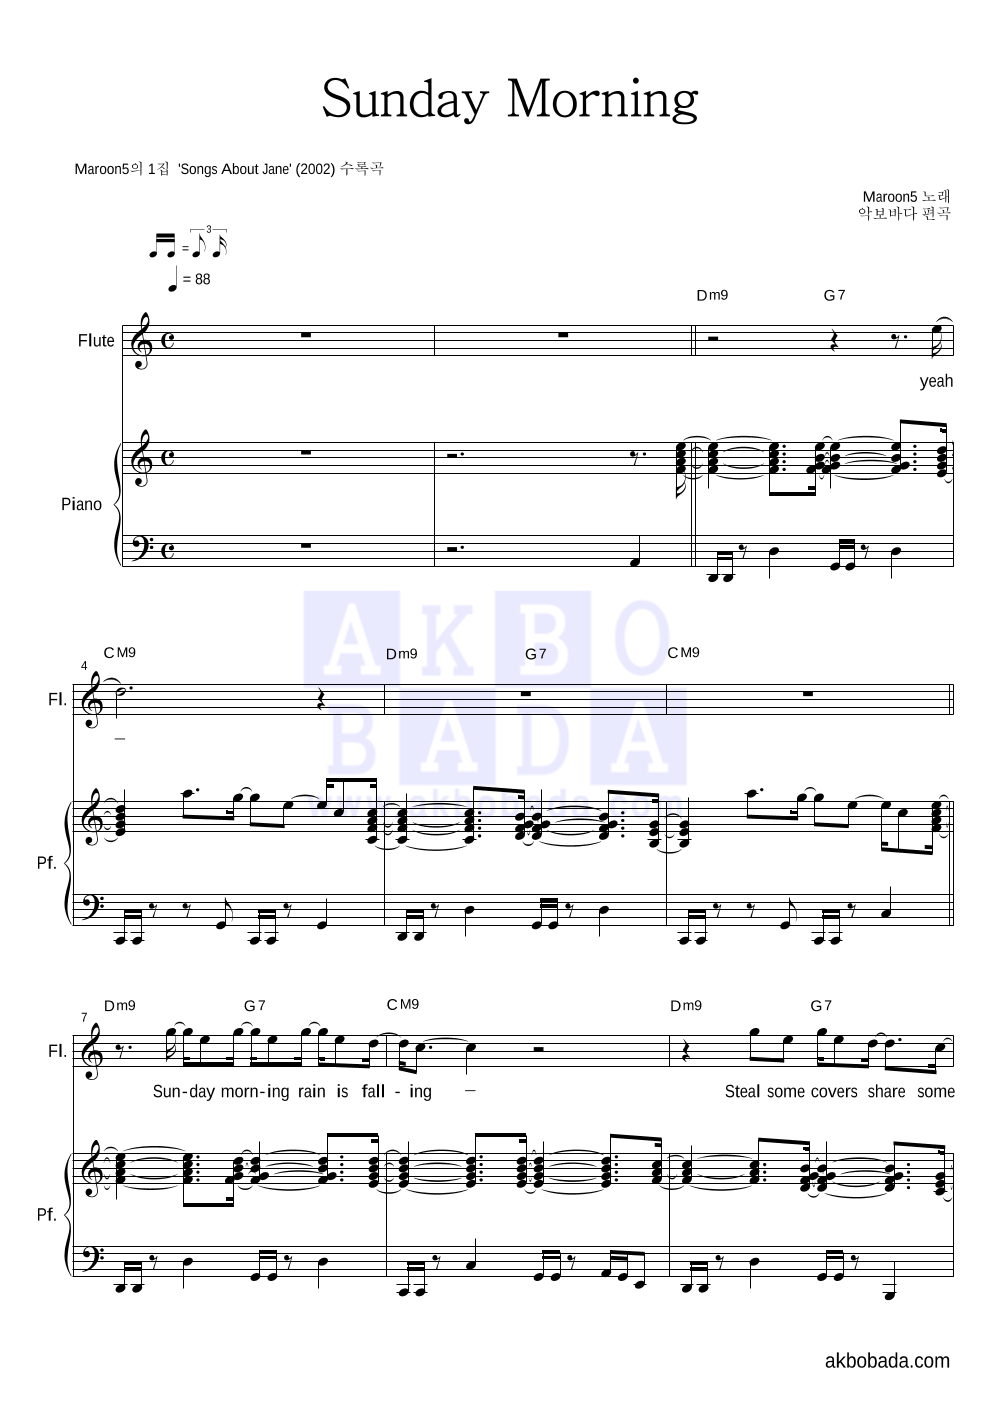 Maroon5 - Sunday Morning 플룻&피아노 악보 